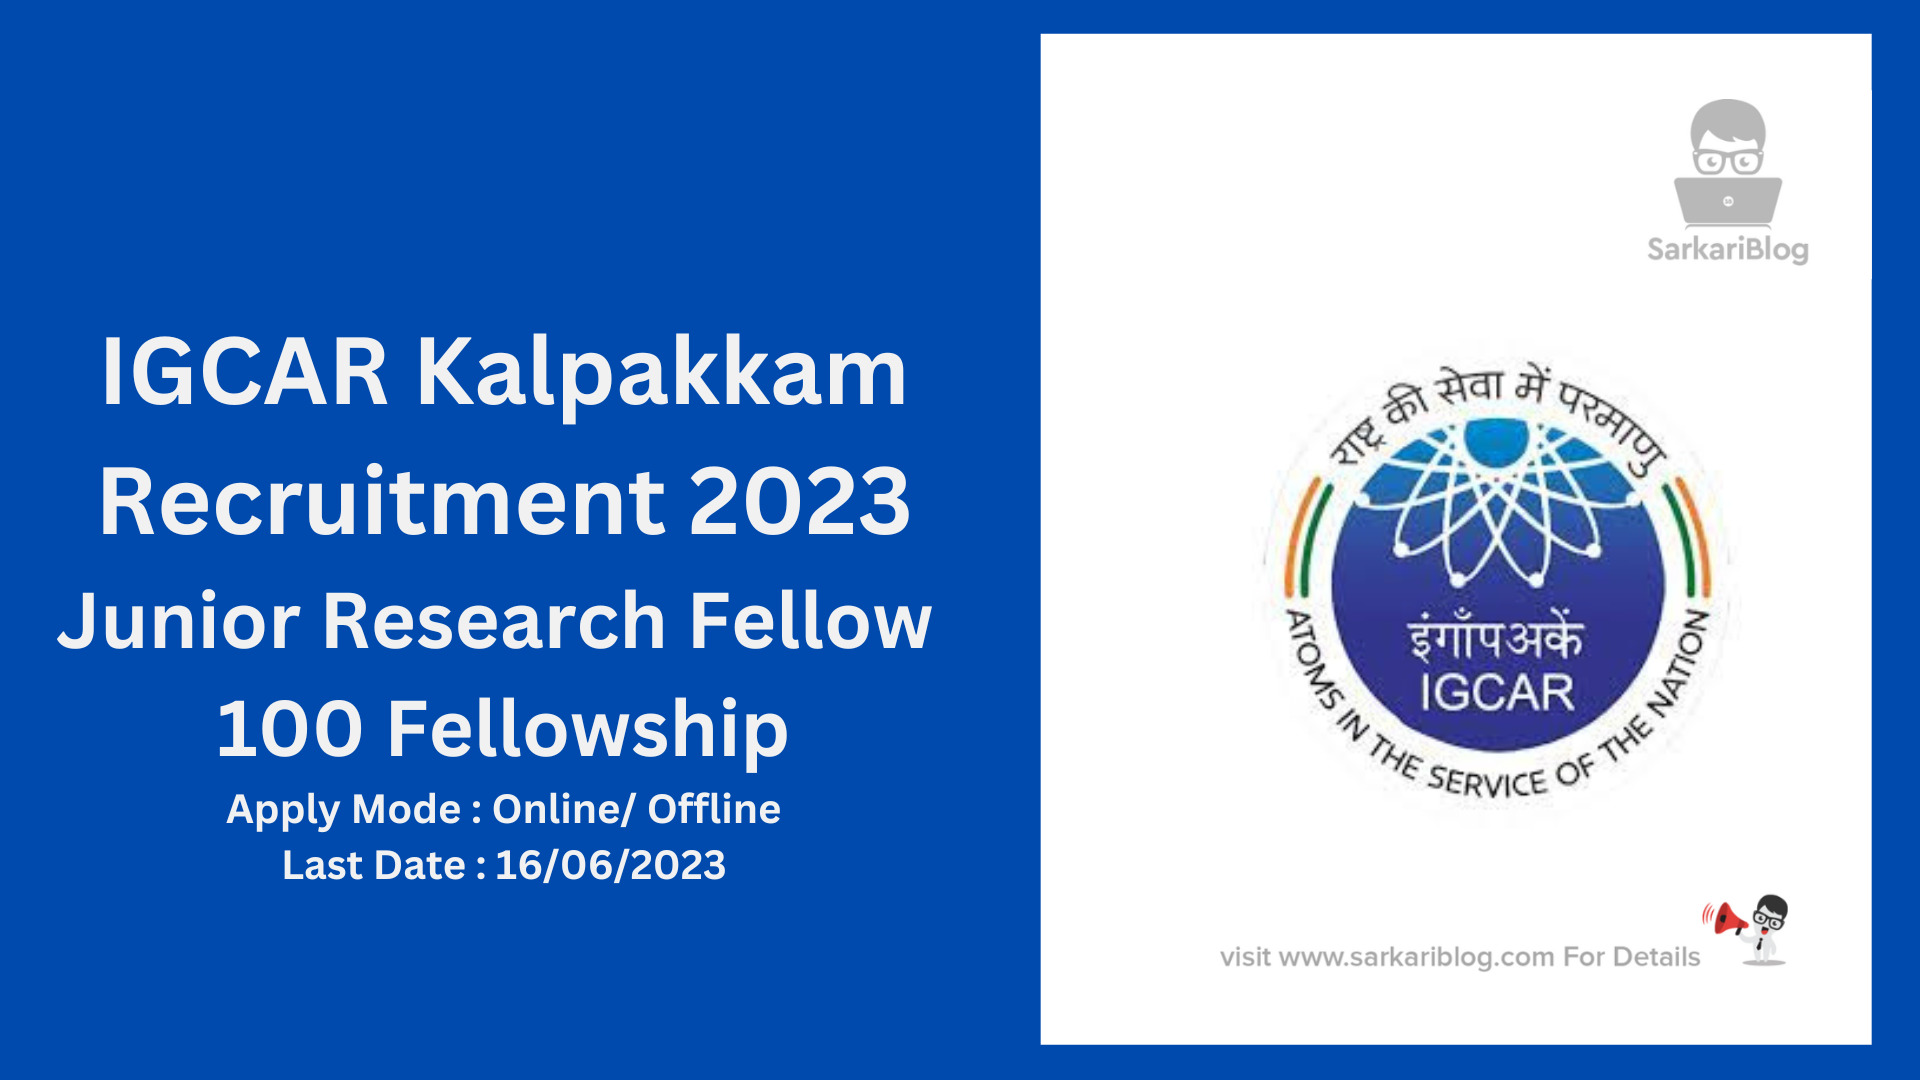 IGCAR Kalpakkam Recruitment 2023